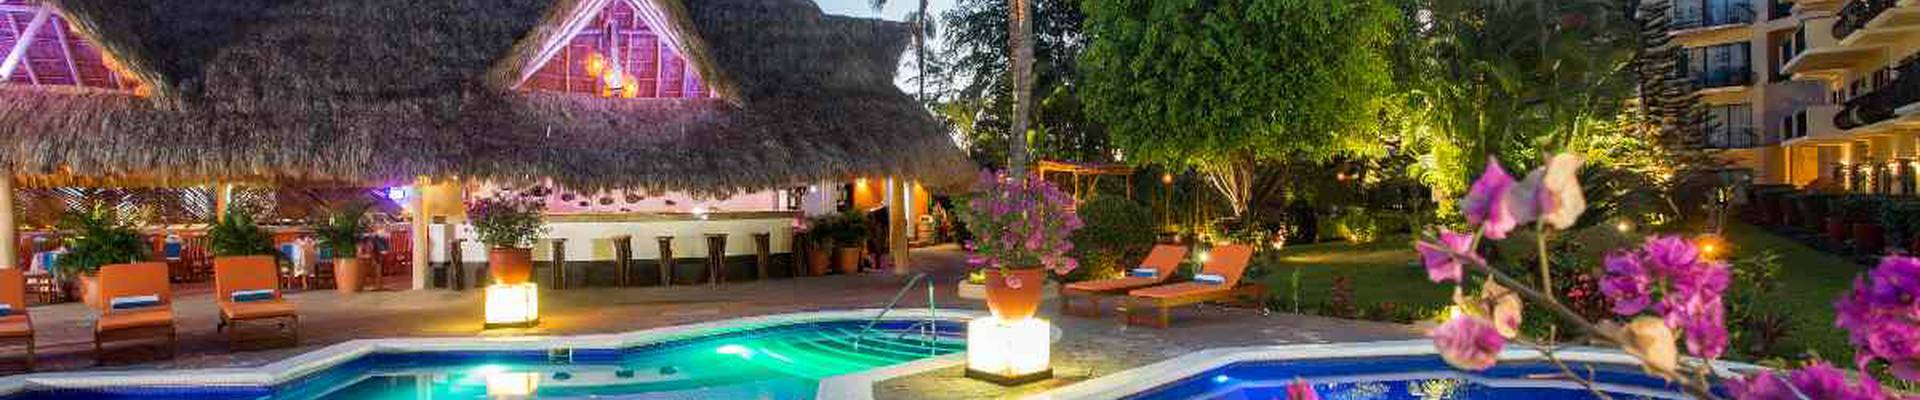 Flamingo Hotels - Puerto Vallarta - 